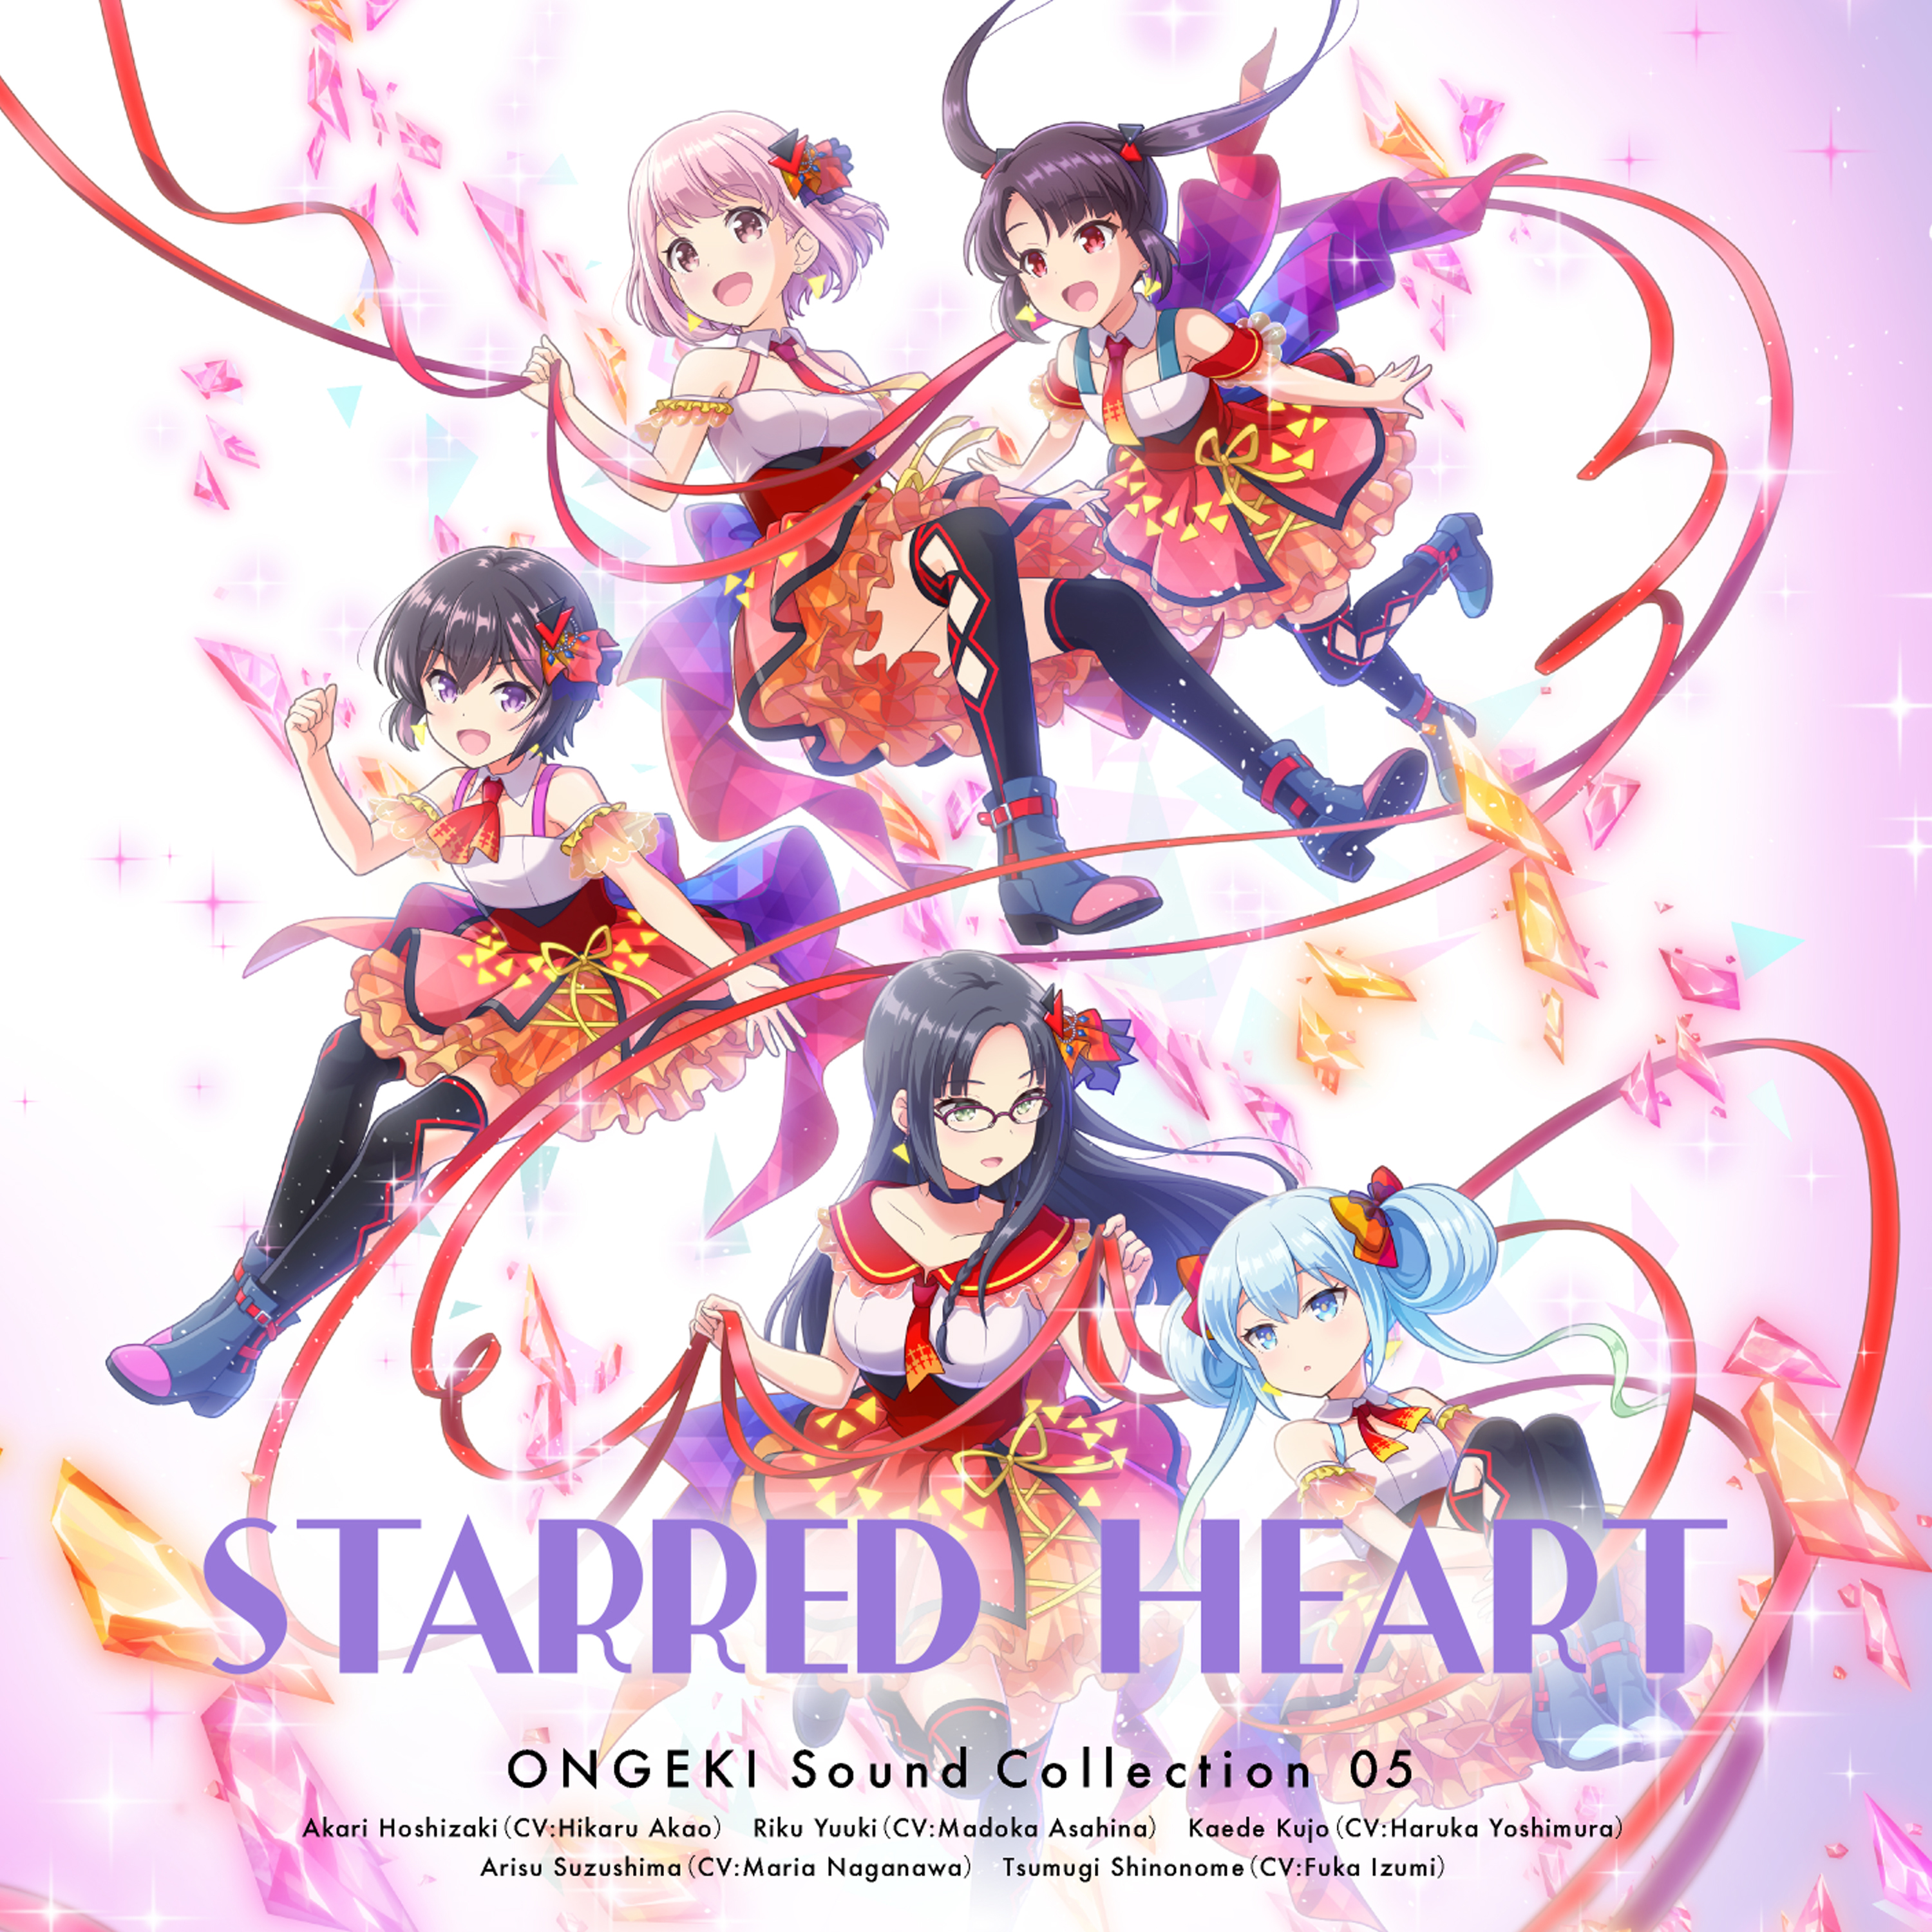 ONGEKI Sound Collection 05『STARRED HEART』 - MONACA Wiki